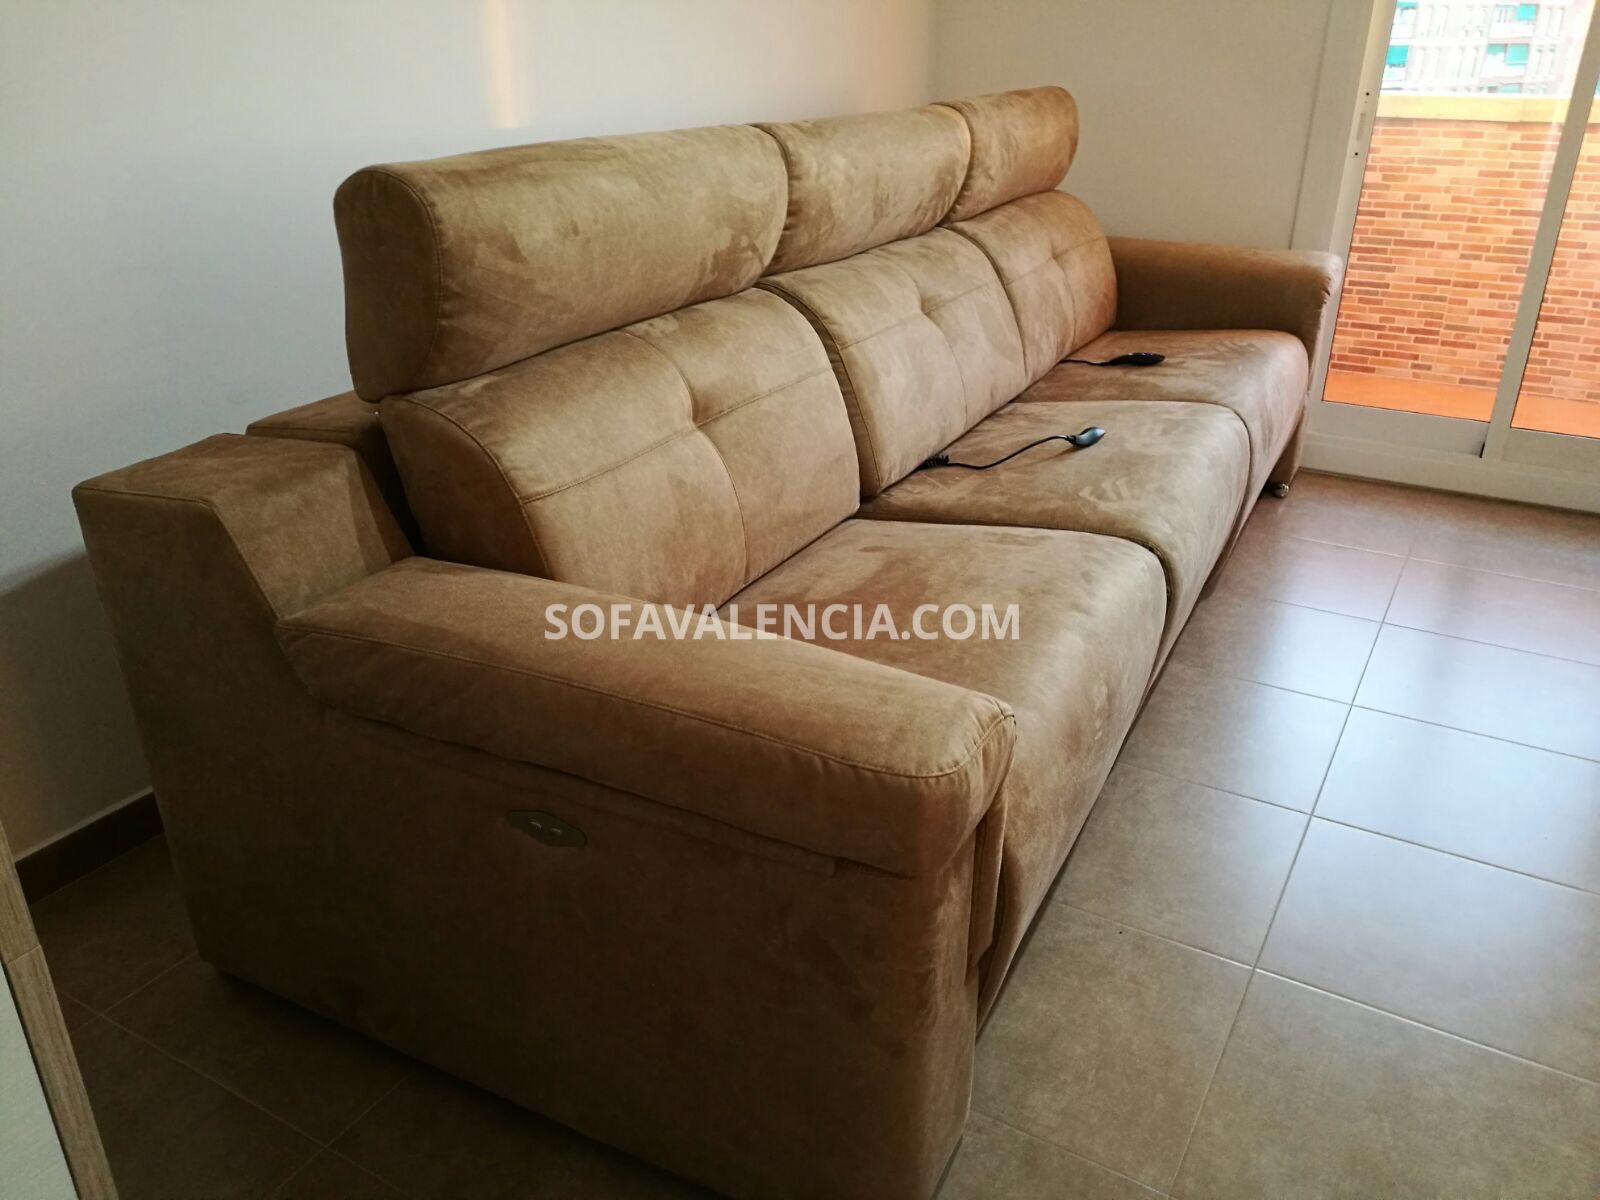 sofa-valencia-fotos-clientes-16